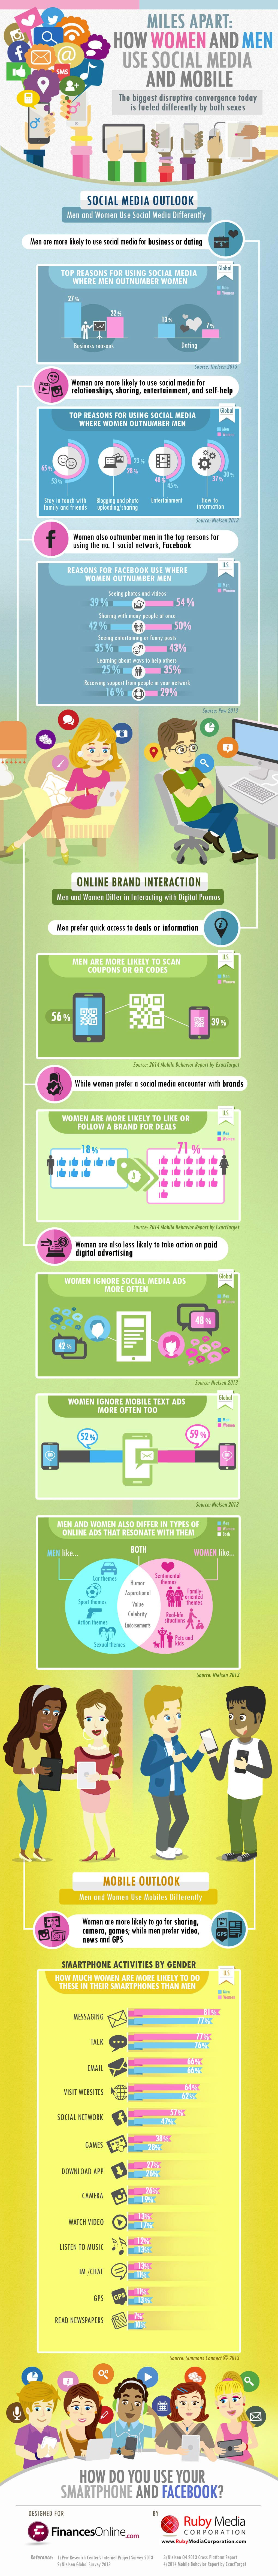 -smartphone-social-media-usage-men-vs-women-infographic